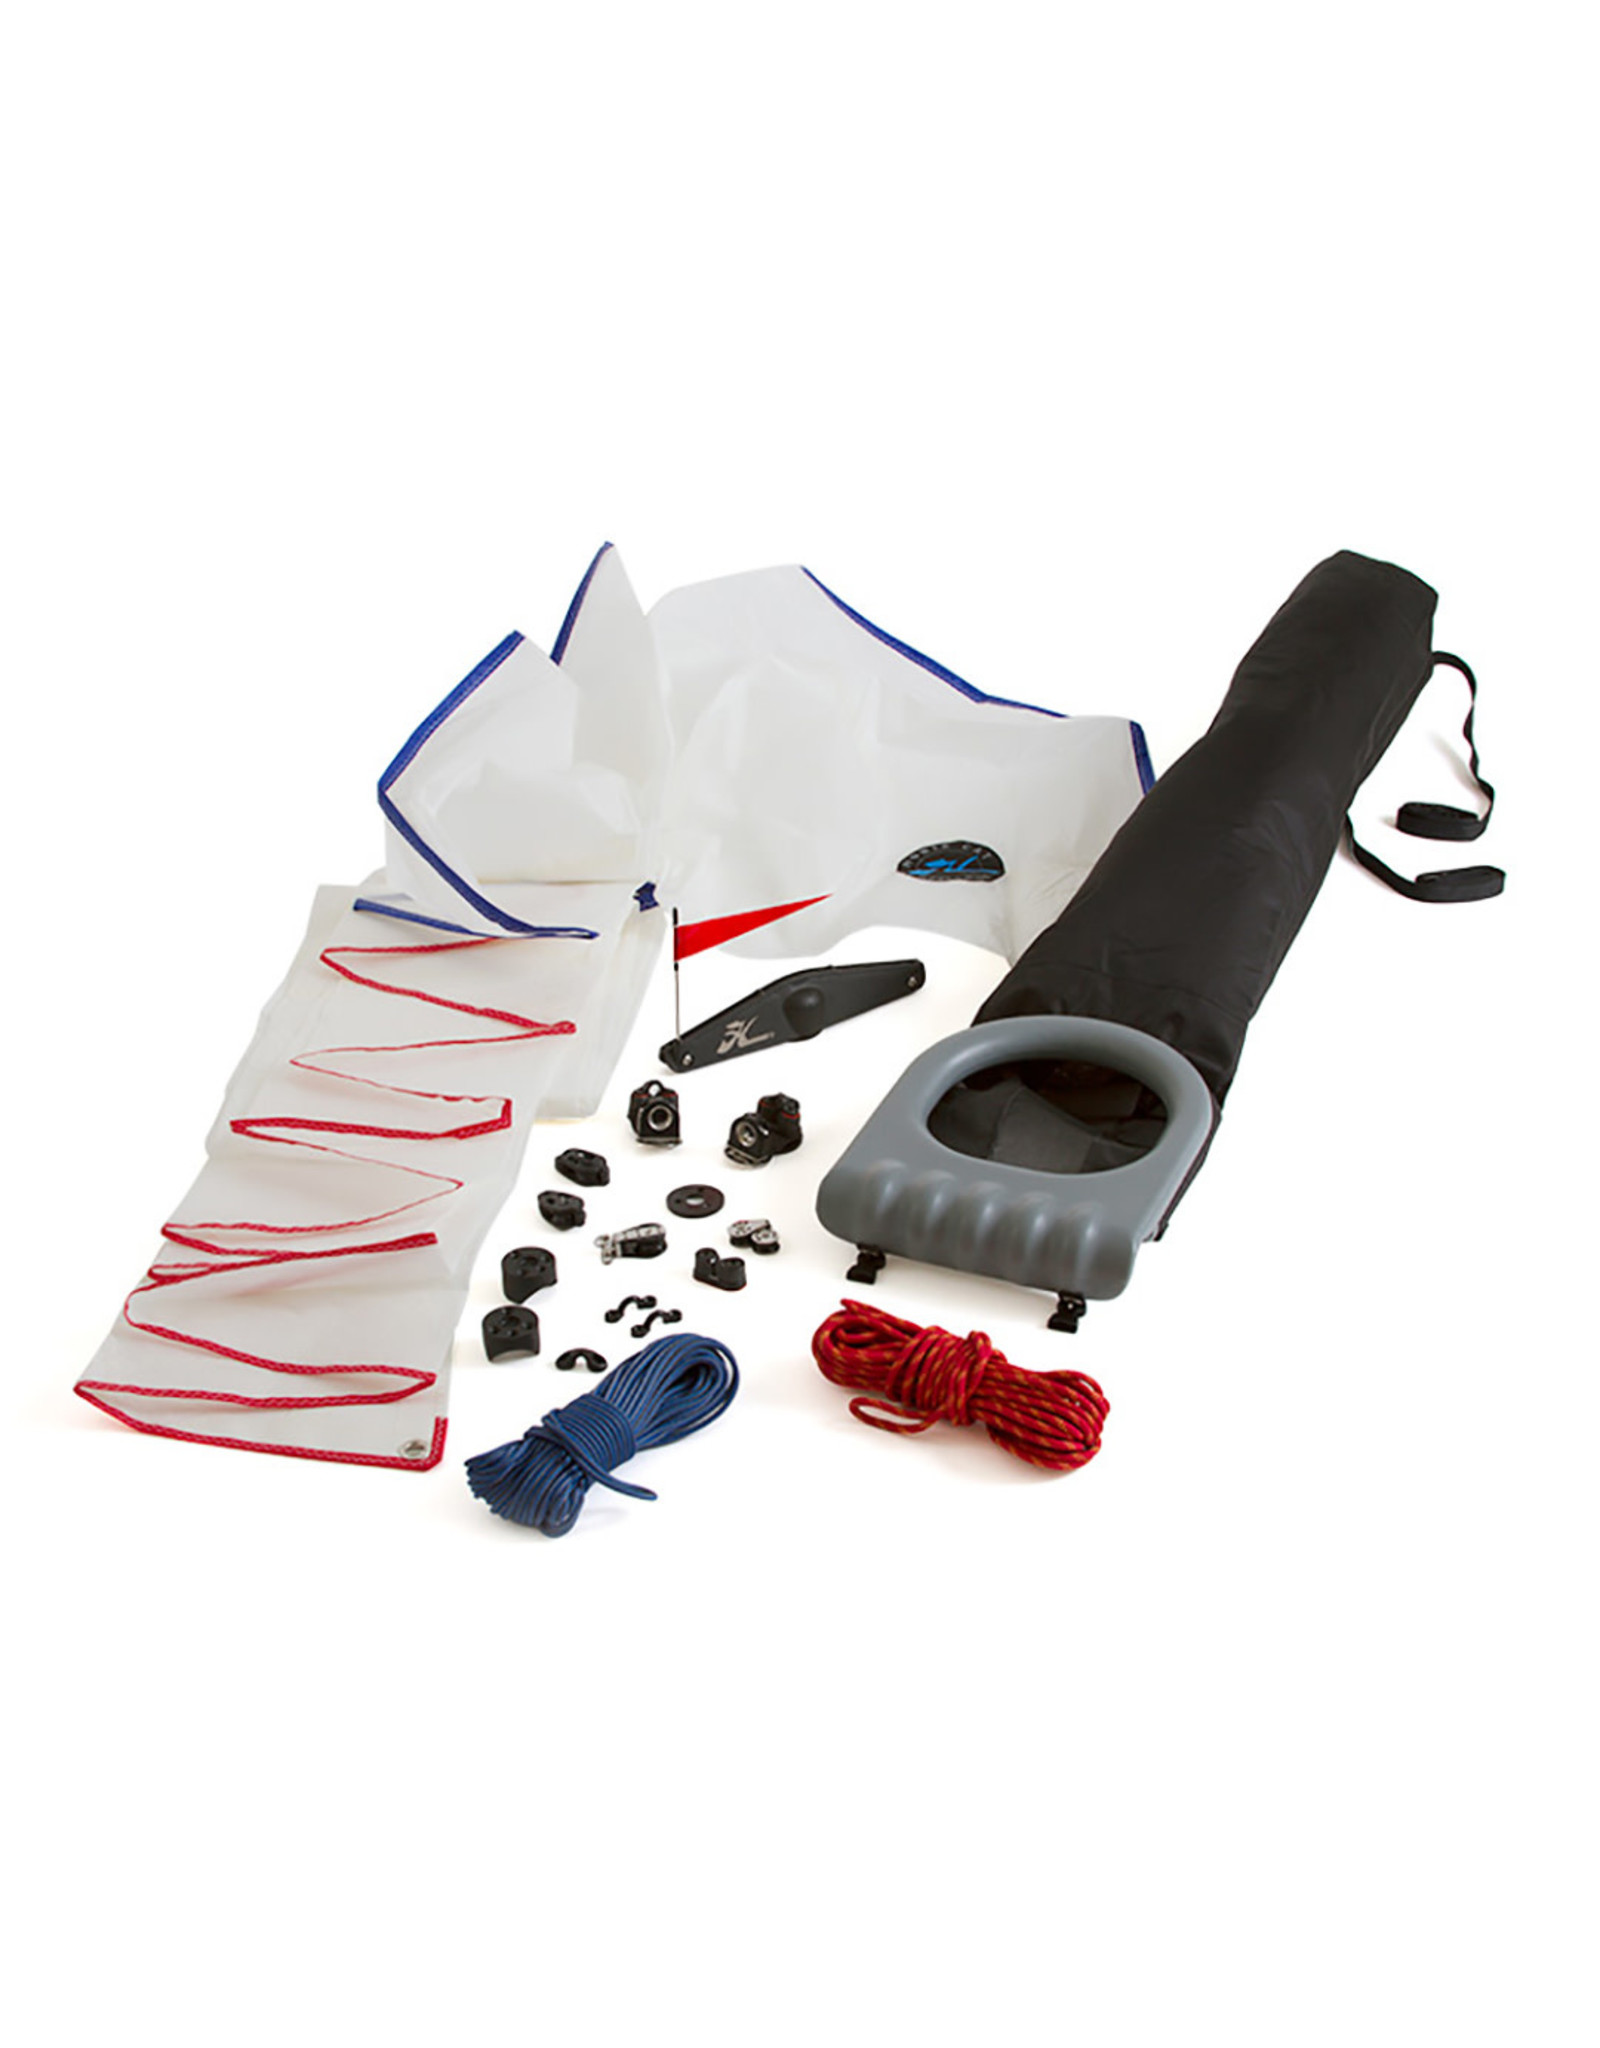 Hobie Hobie Spinnaker Kit for the Hobie Adventure Island Kayak